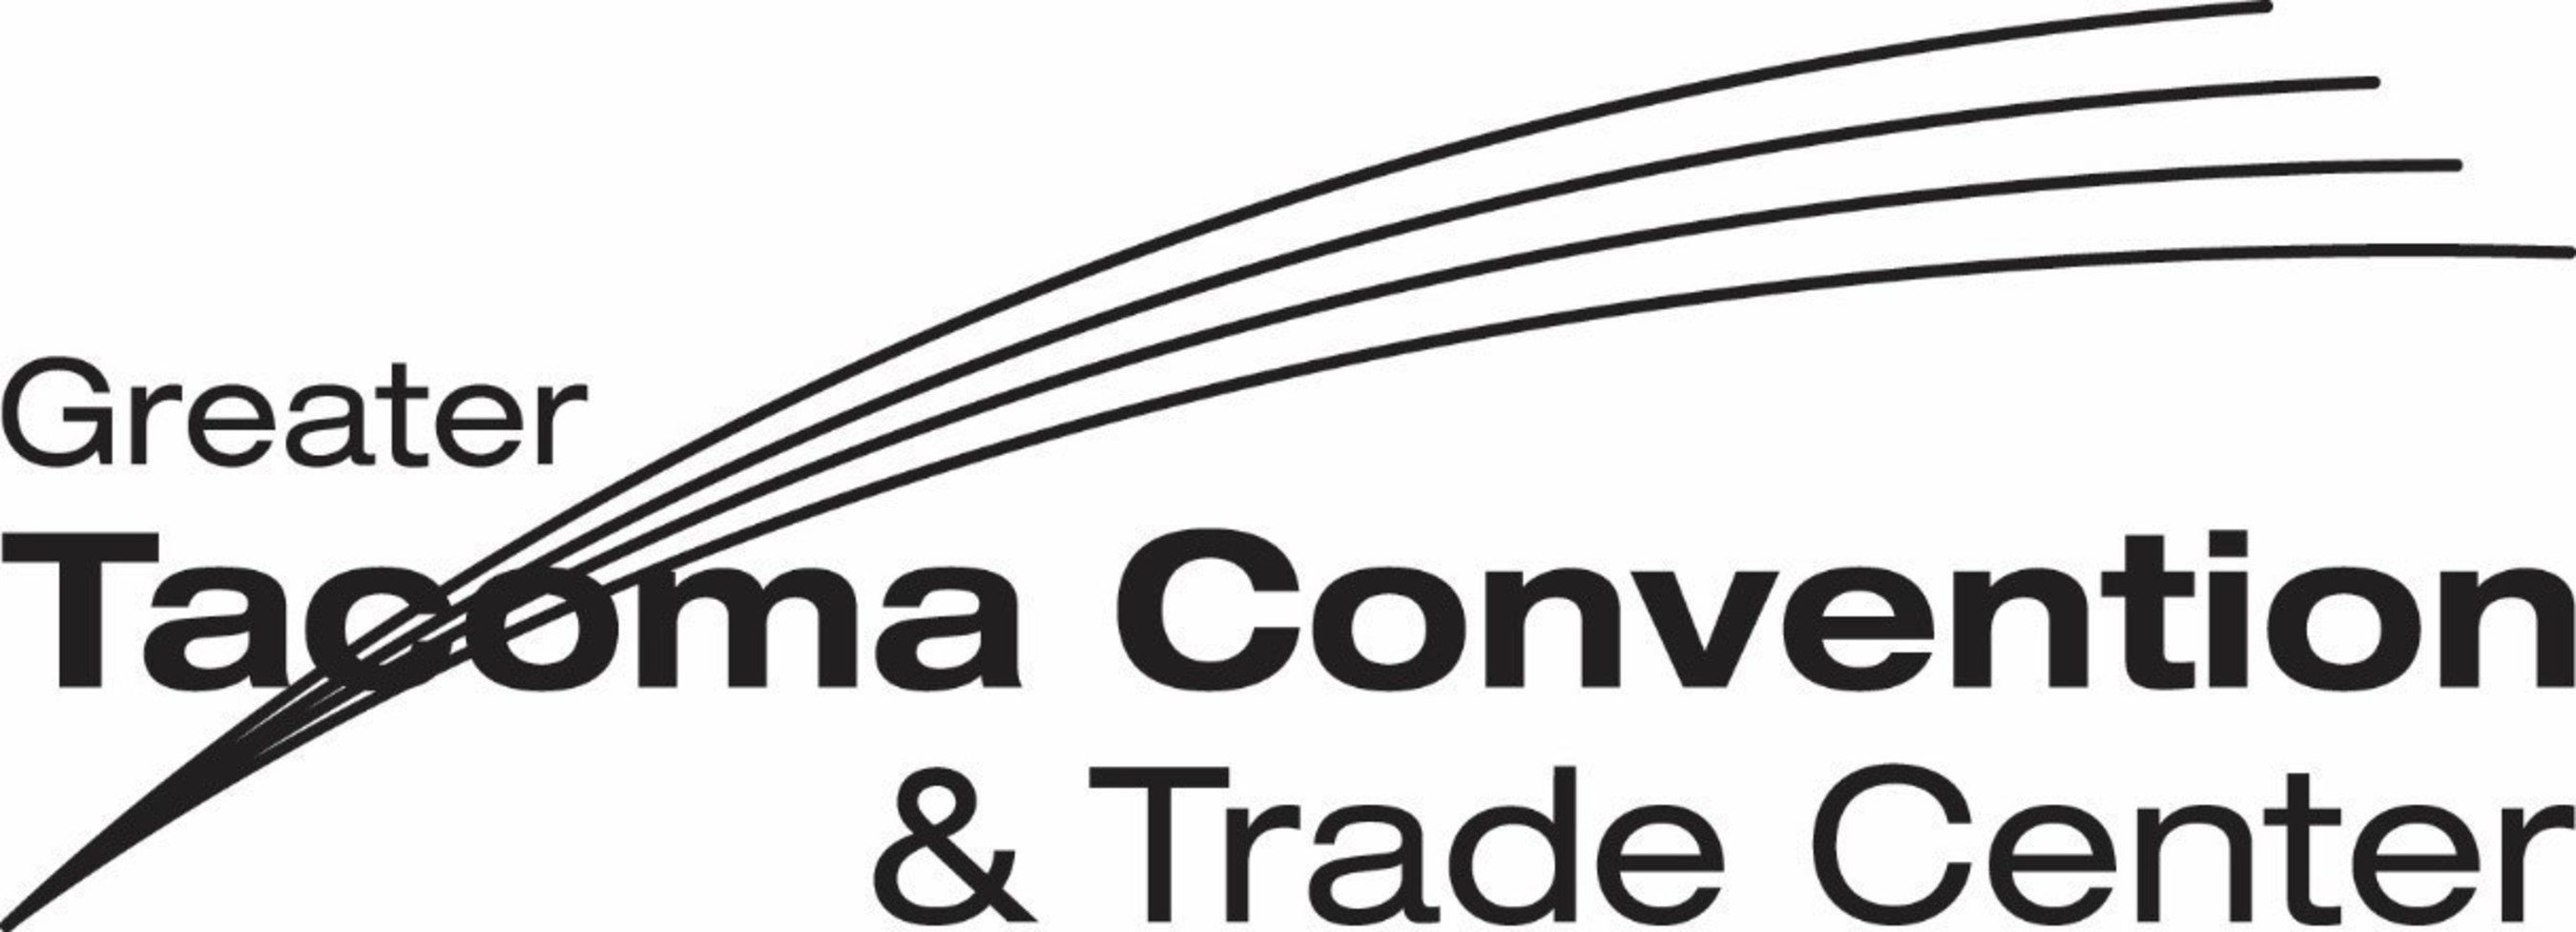 Greater Tacoma Convention & Trade Center Logo